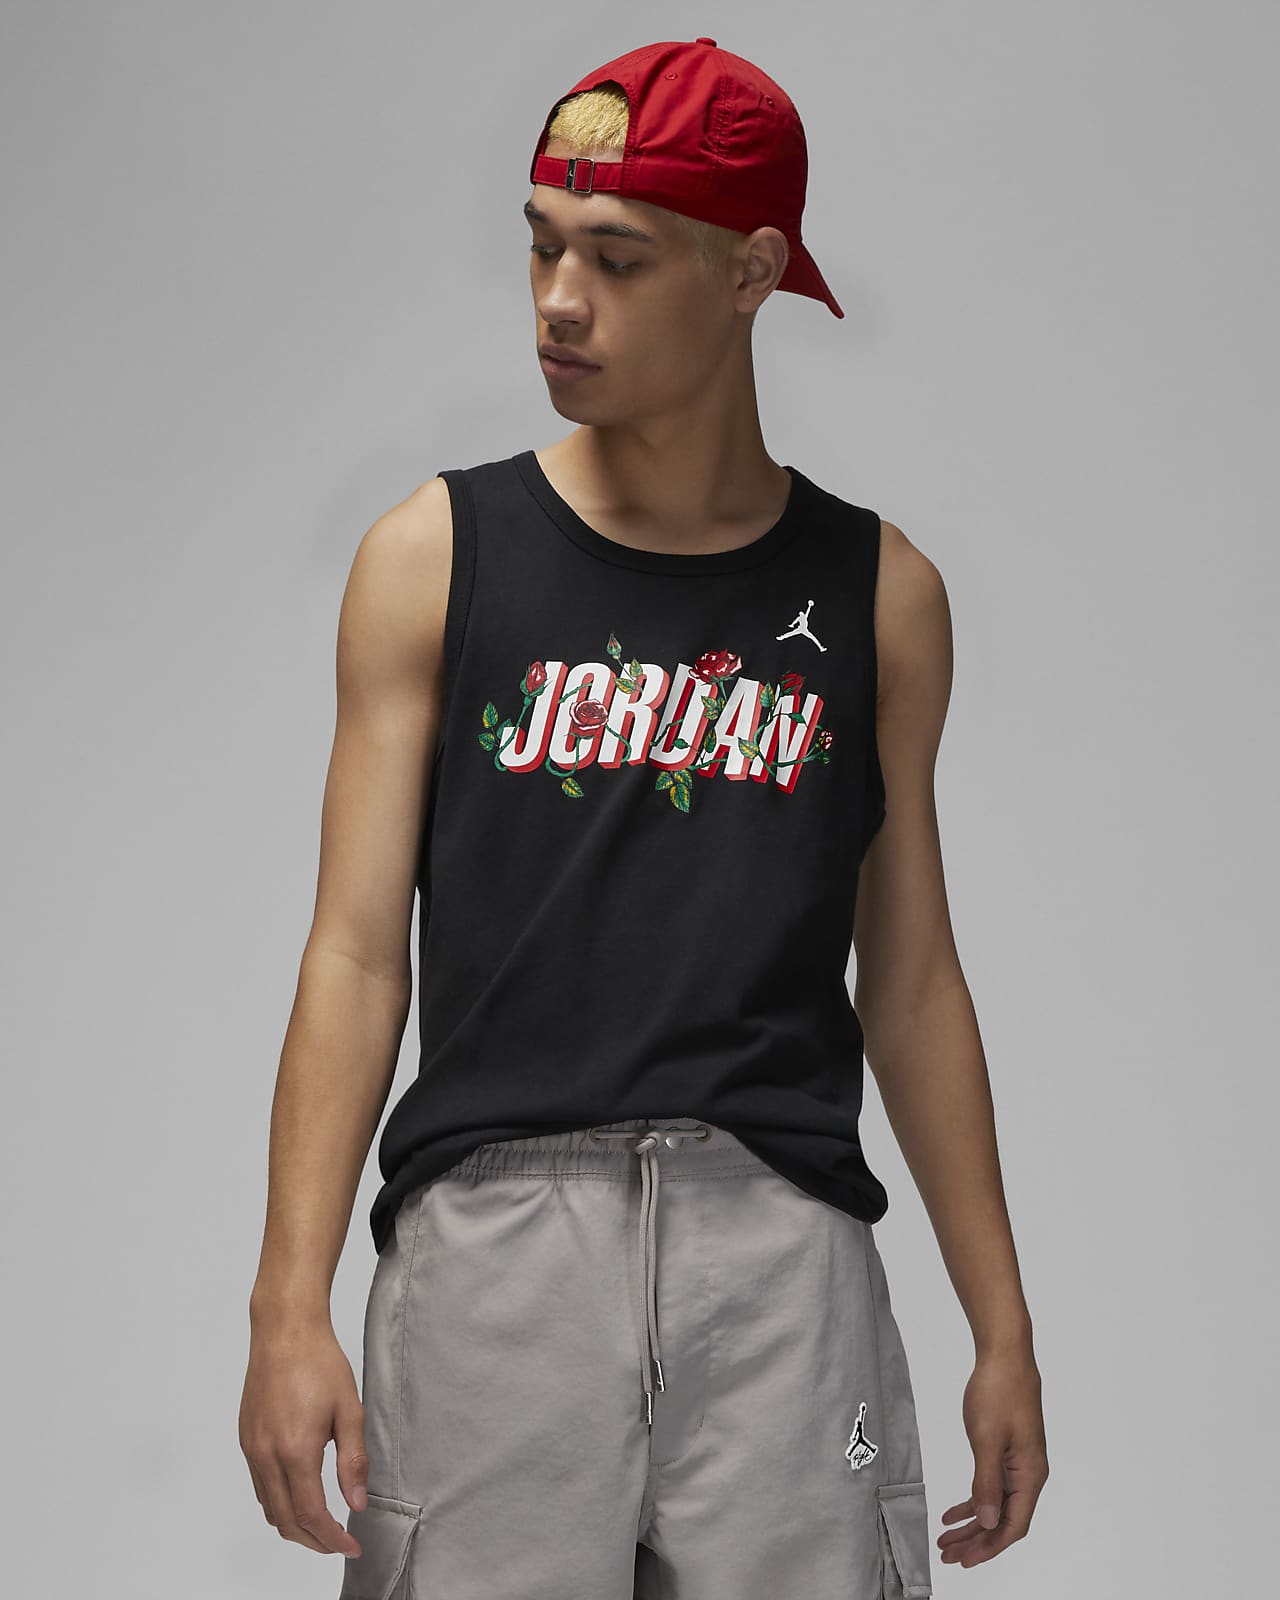 Juramento Publicidad paso Jordan Brand Sorry Camiseta de tirantes - Hombre. Nike ES